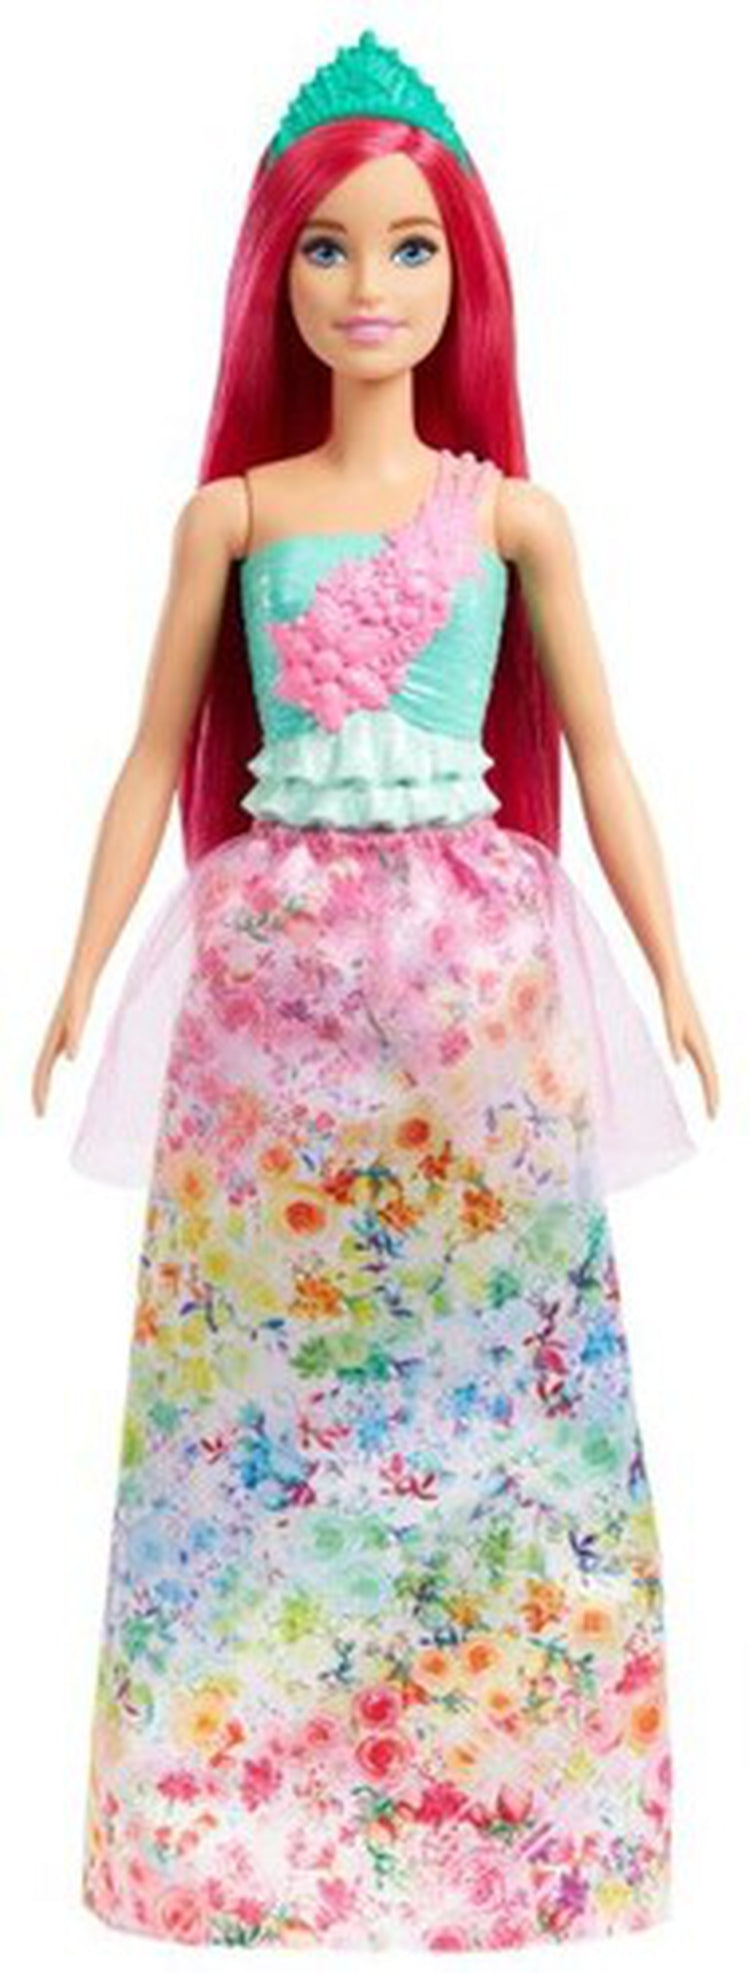 Mattel - Barbie Dreamtopia Princess with Pink Hair and Green Tiara